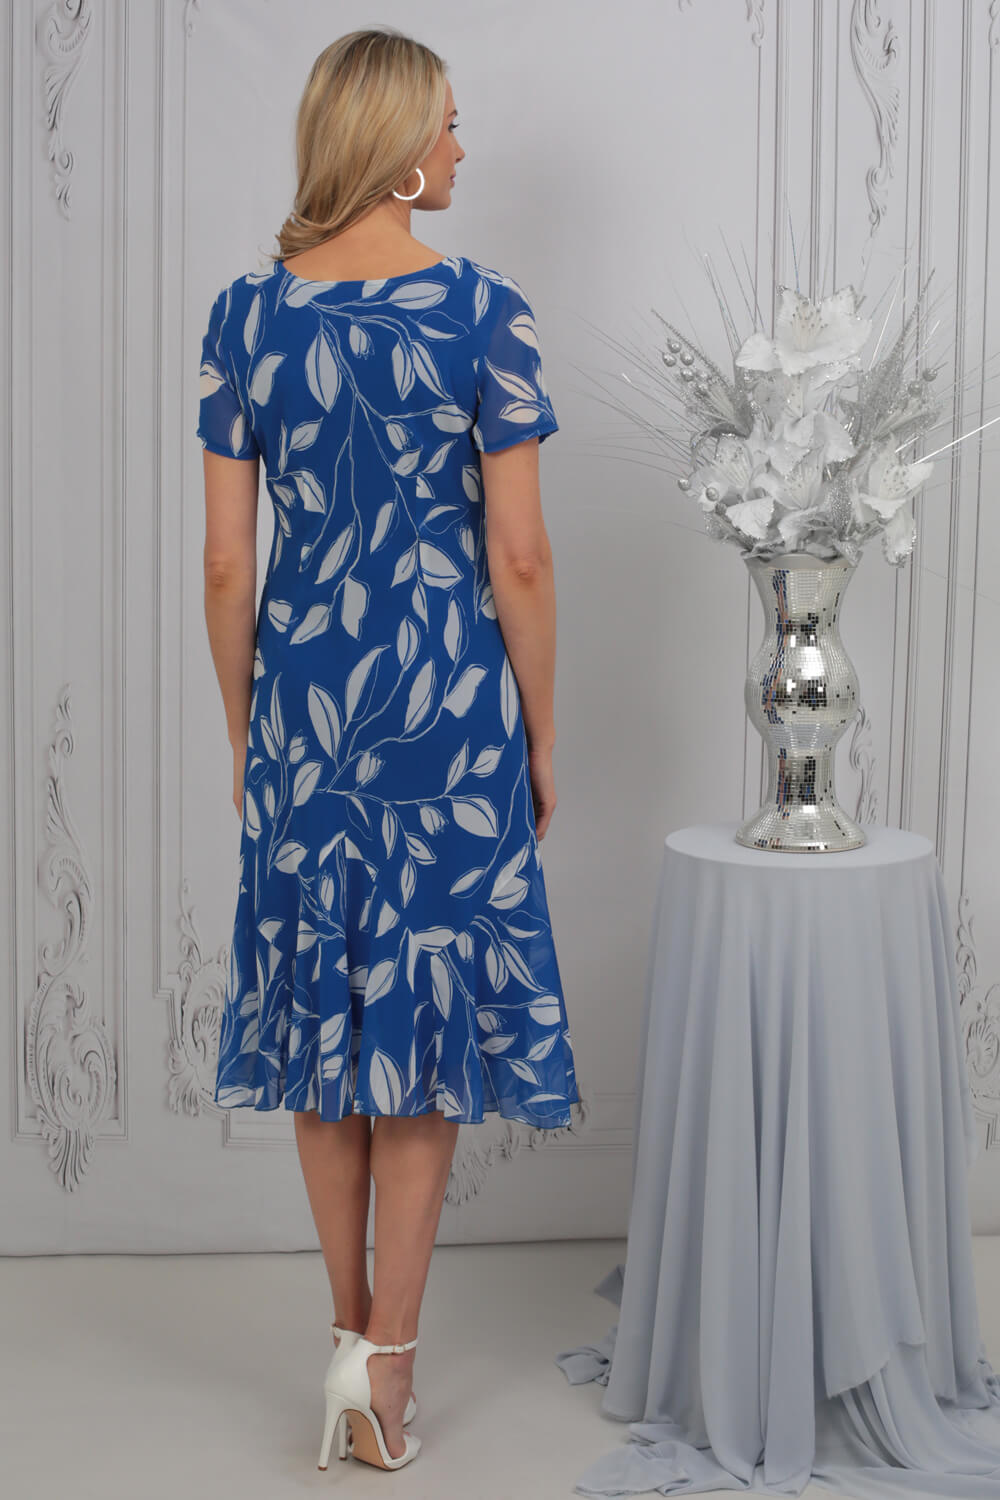 Royal Blue Julianna Floral Print Chiffon Dress, Image 2 of 3